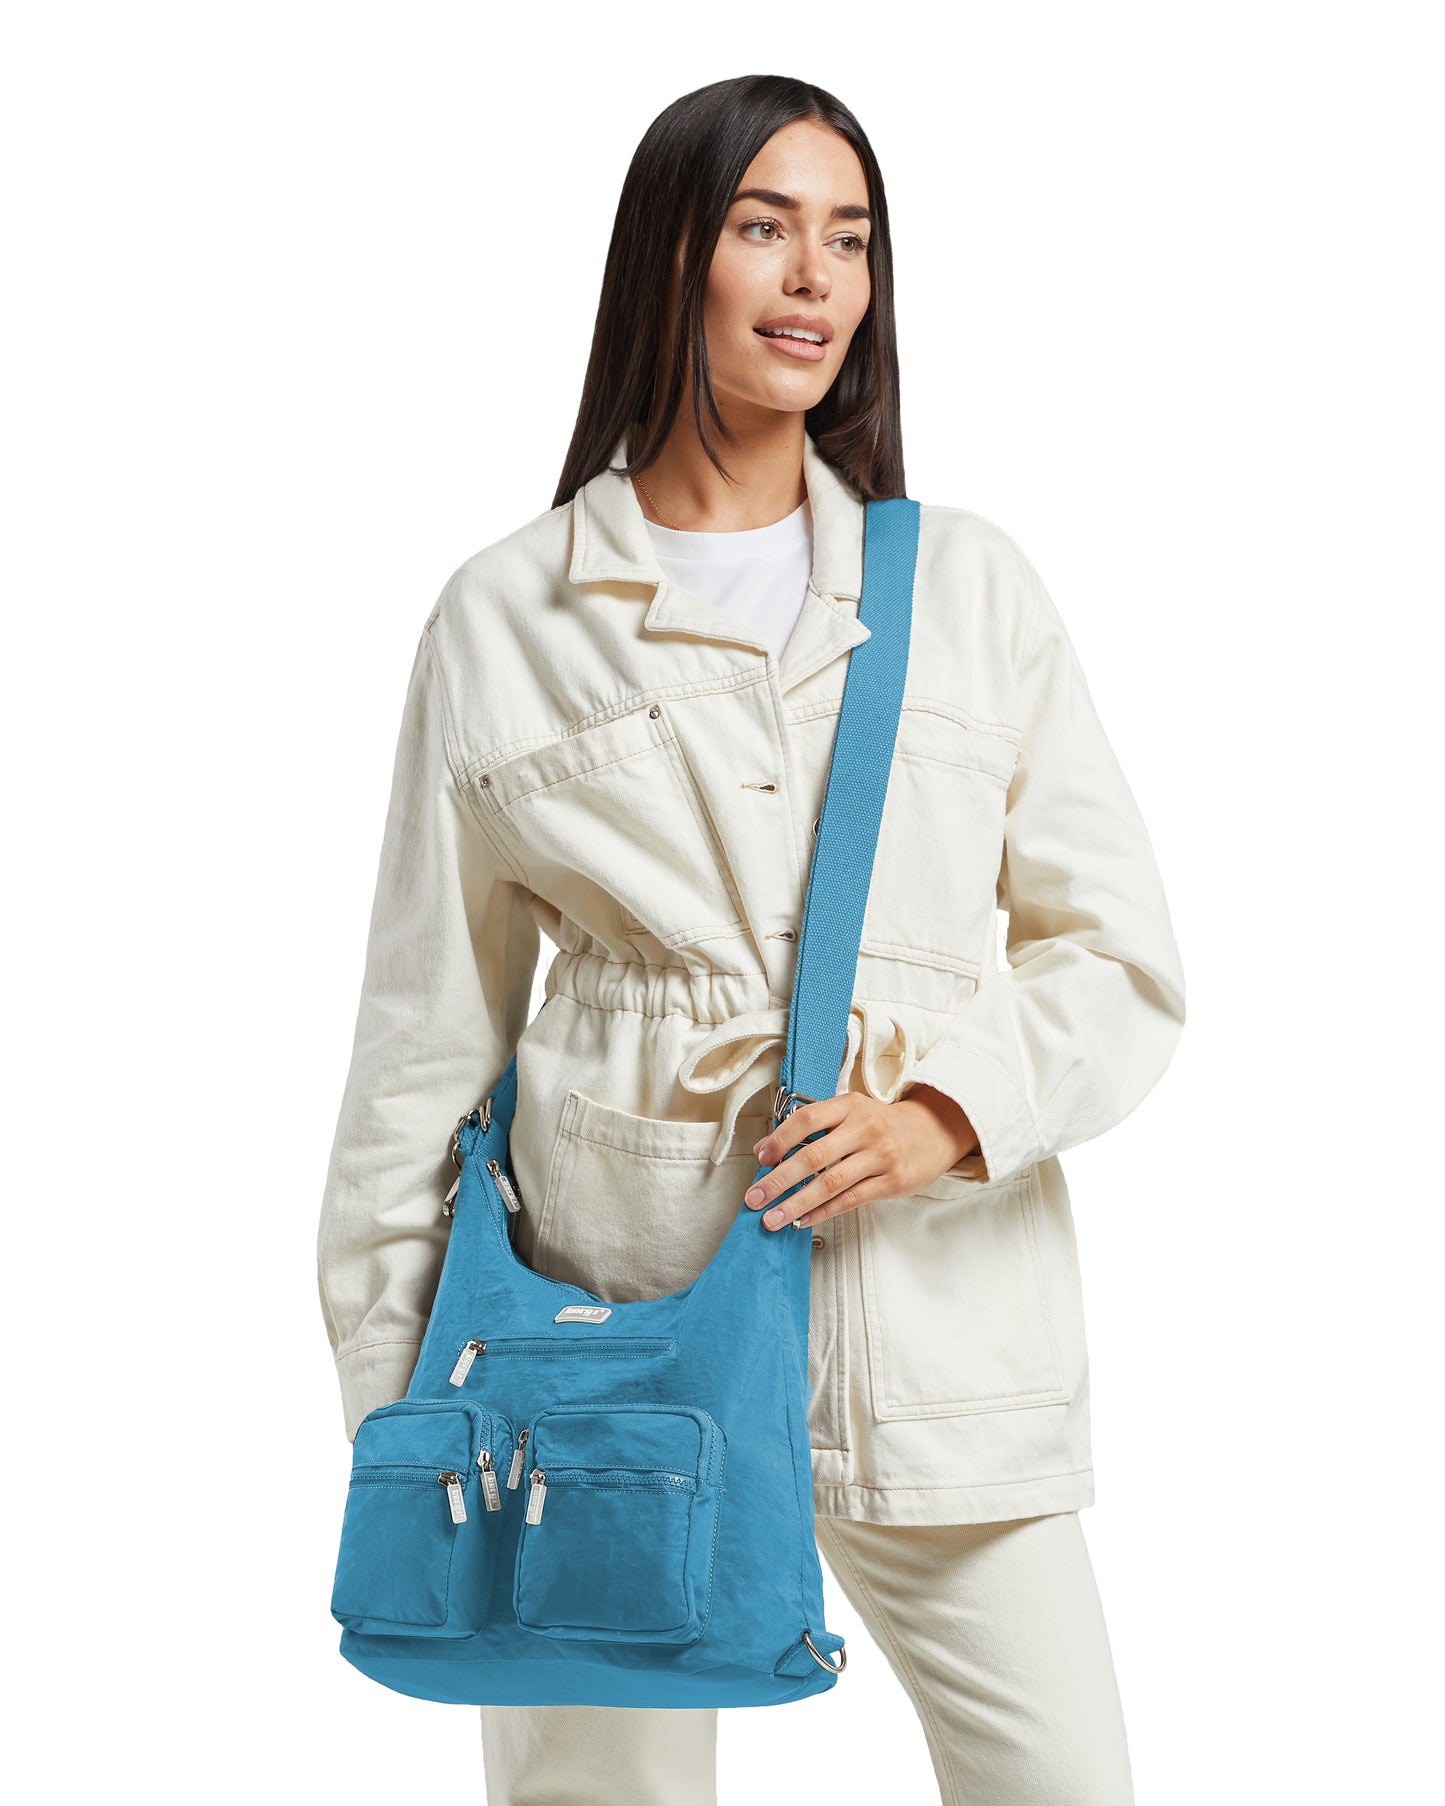 Funky Convertible Handbags to Backpack to Shoulder Bag Nylon 15L